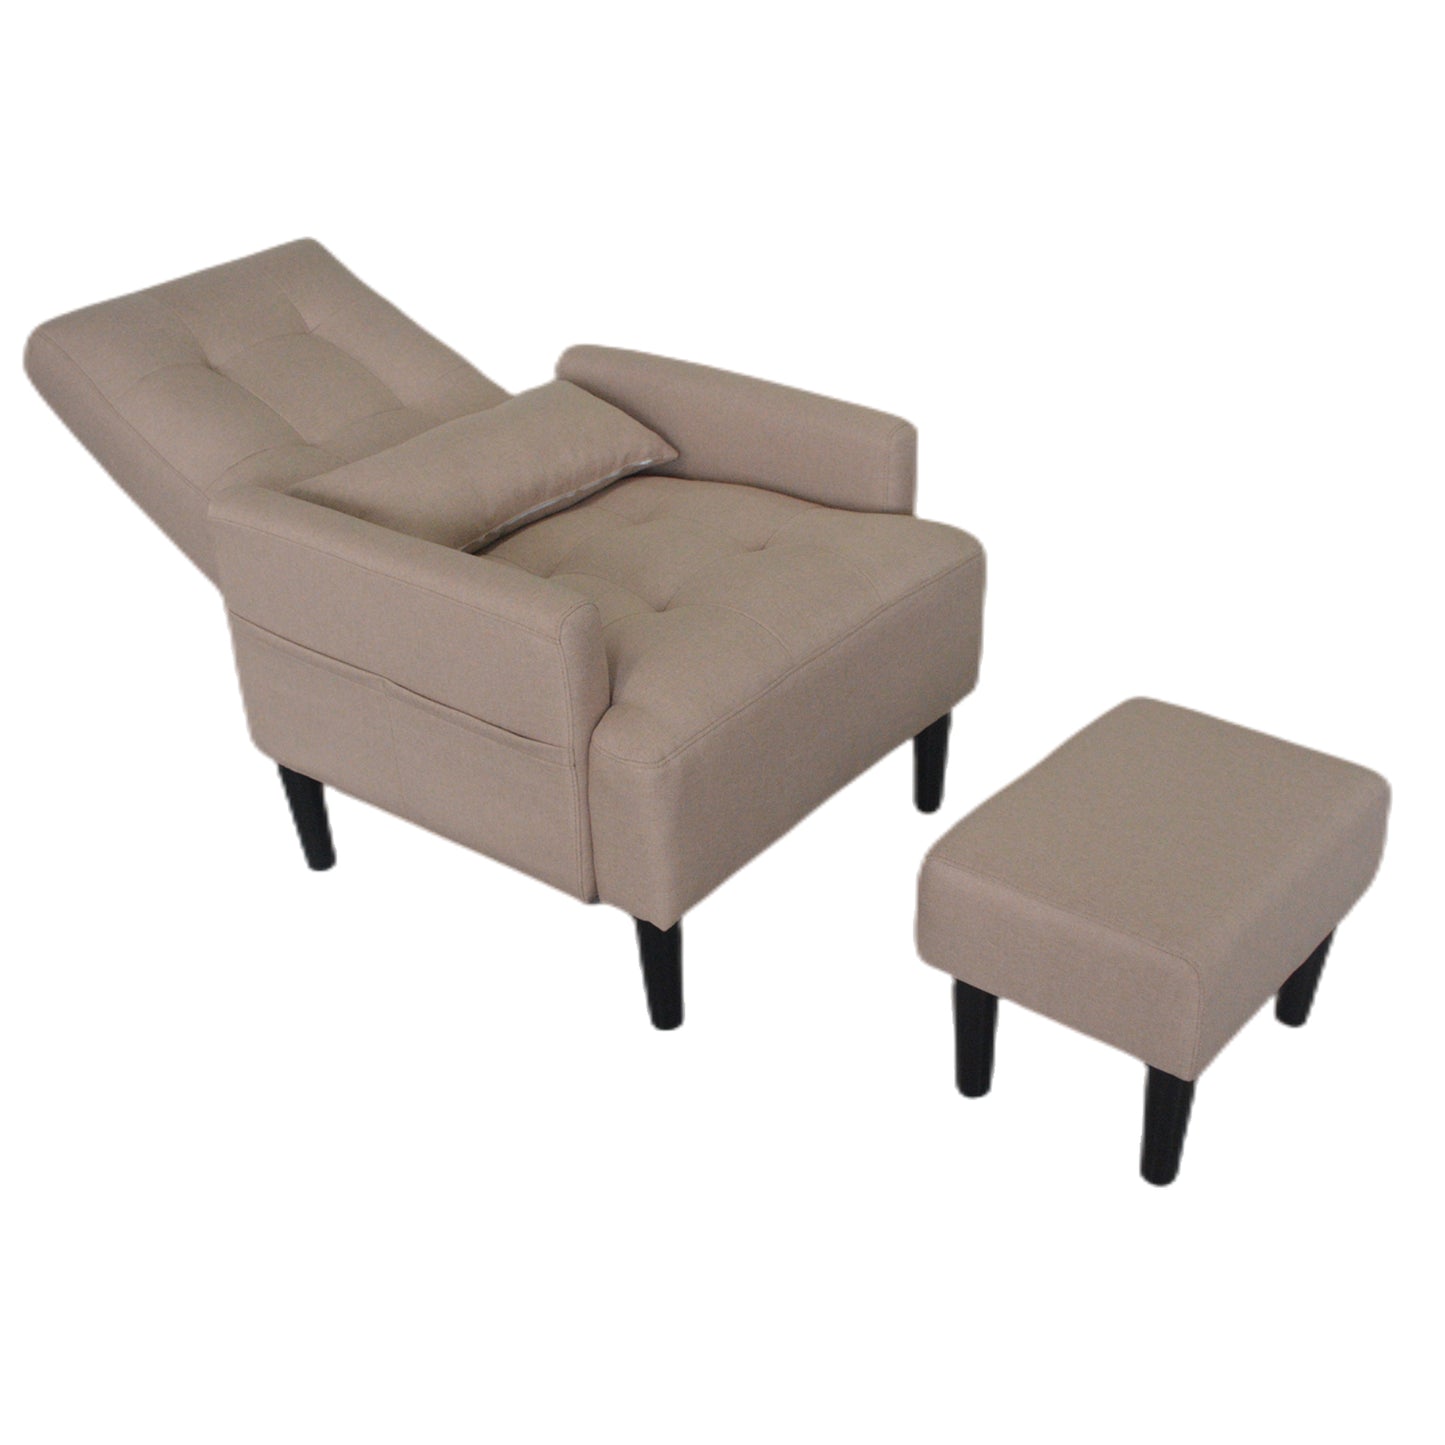 1st Choice Redde Boo Brown Living Room Sofa Single Chair and Ottoman